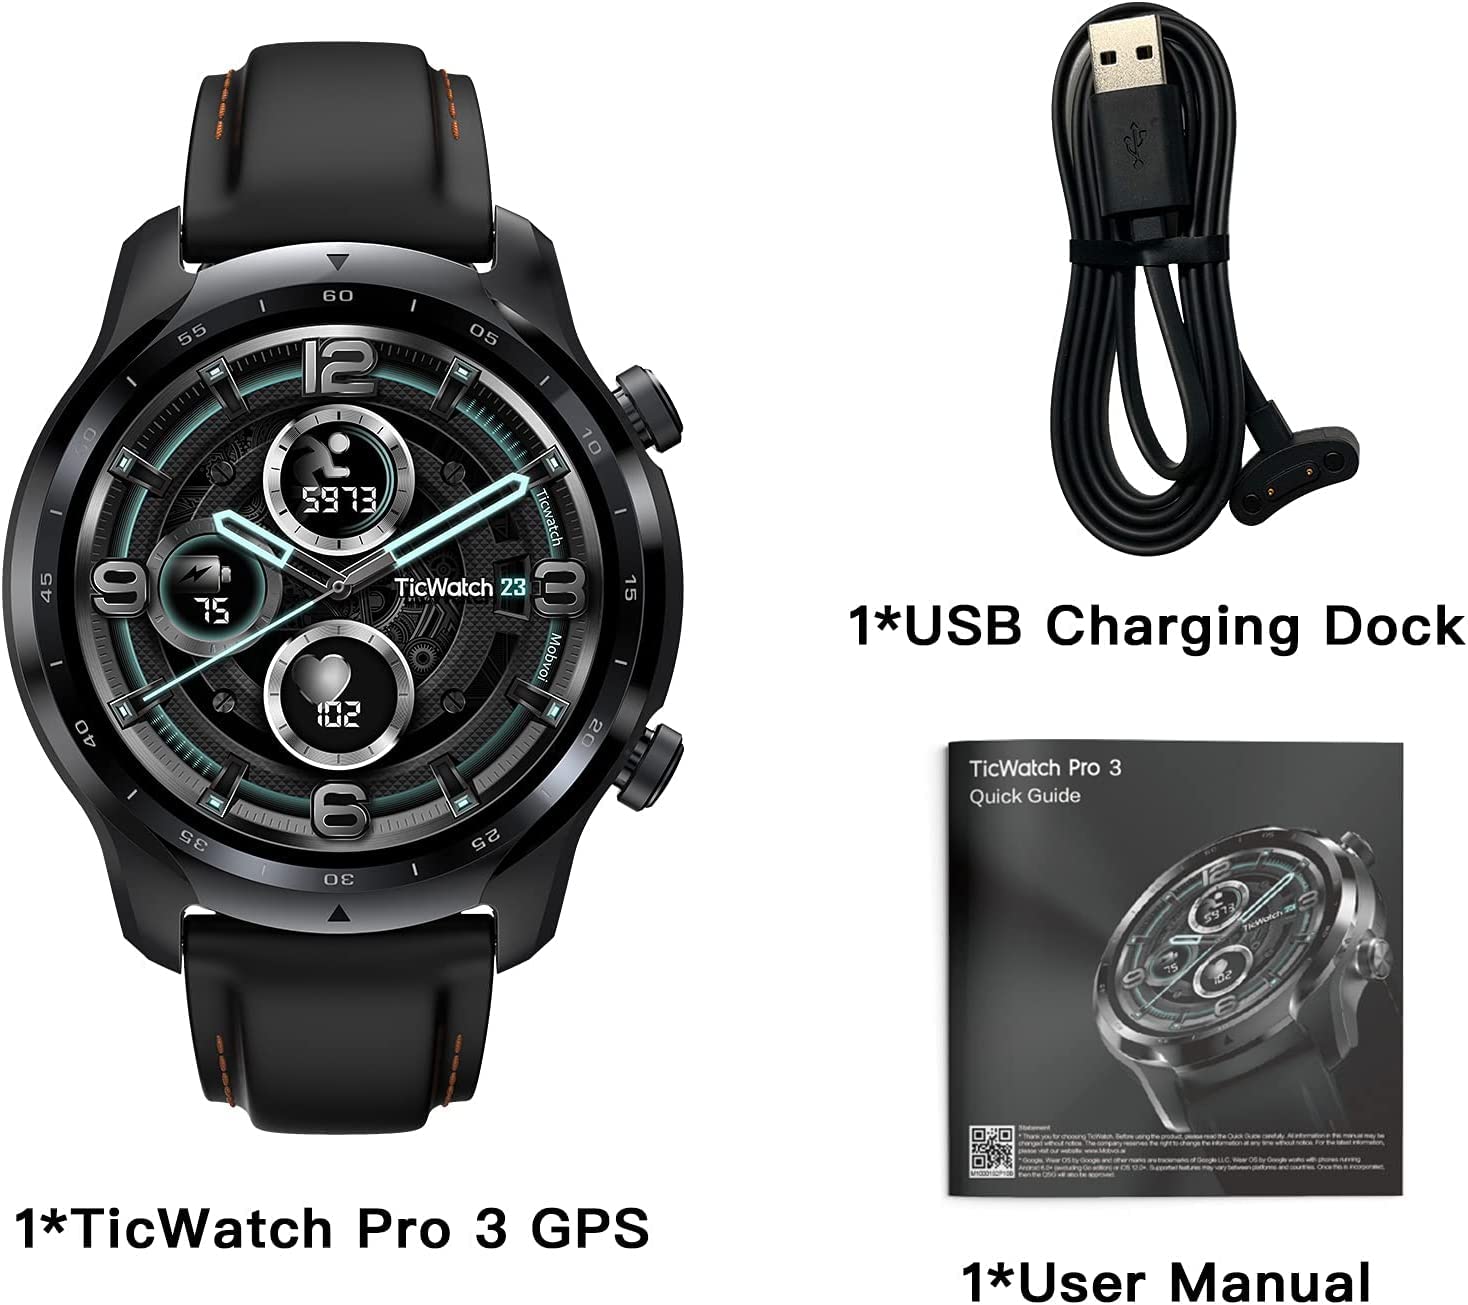 Ticwatch Pro 3 GPS Smart Watch Men's Wear OS Watch Qualcomm Snapdragon Wear 4100 Platform Health Fitness Monitoring 3-45 Days Battery Life Built-in GPS NFC Heart Rate Sleep Tracking IP68 Waterproof